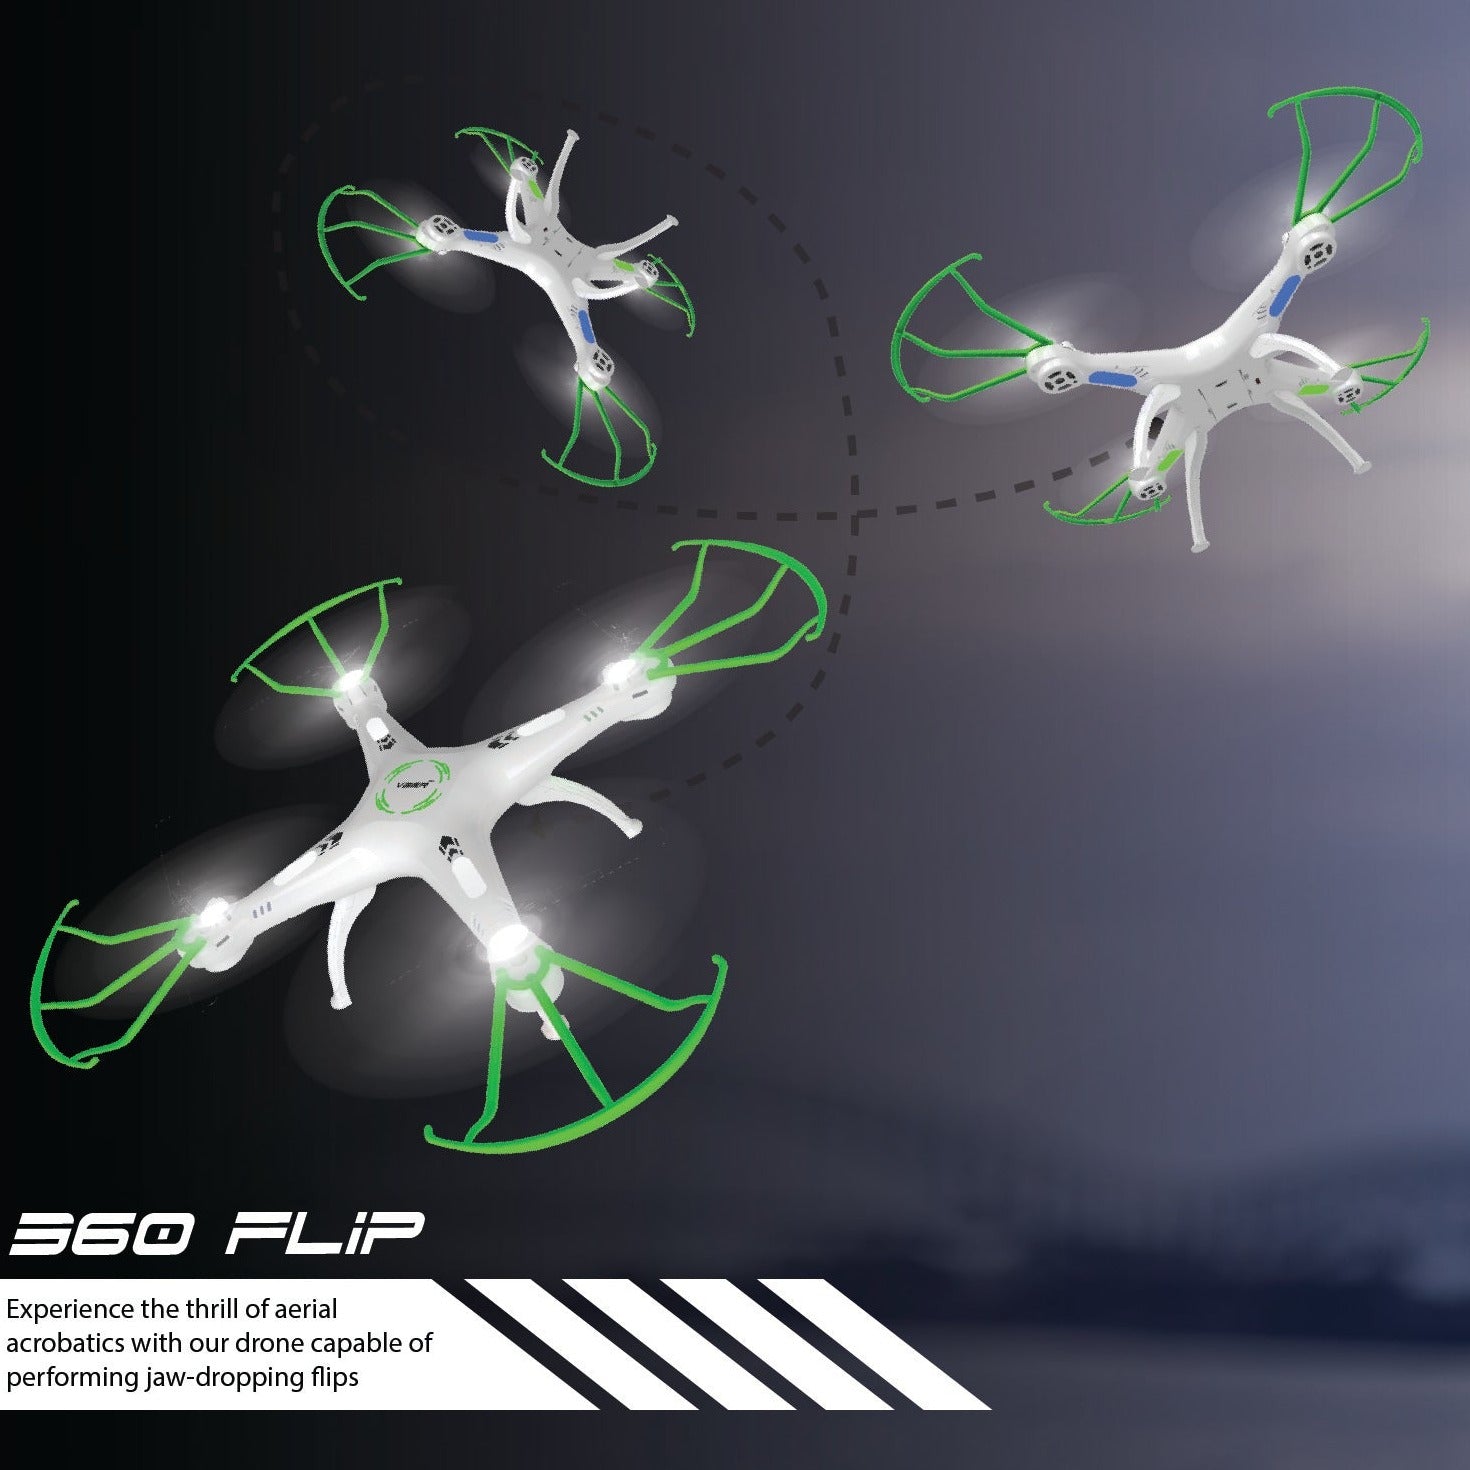    veer-360-high-altitude-drone-best-drone-amazon-flipkart-helicopter-garuda-1080-electrobotic-drone_6